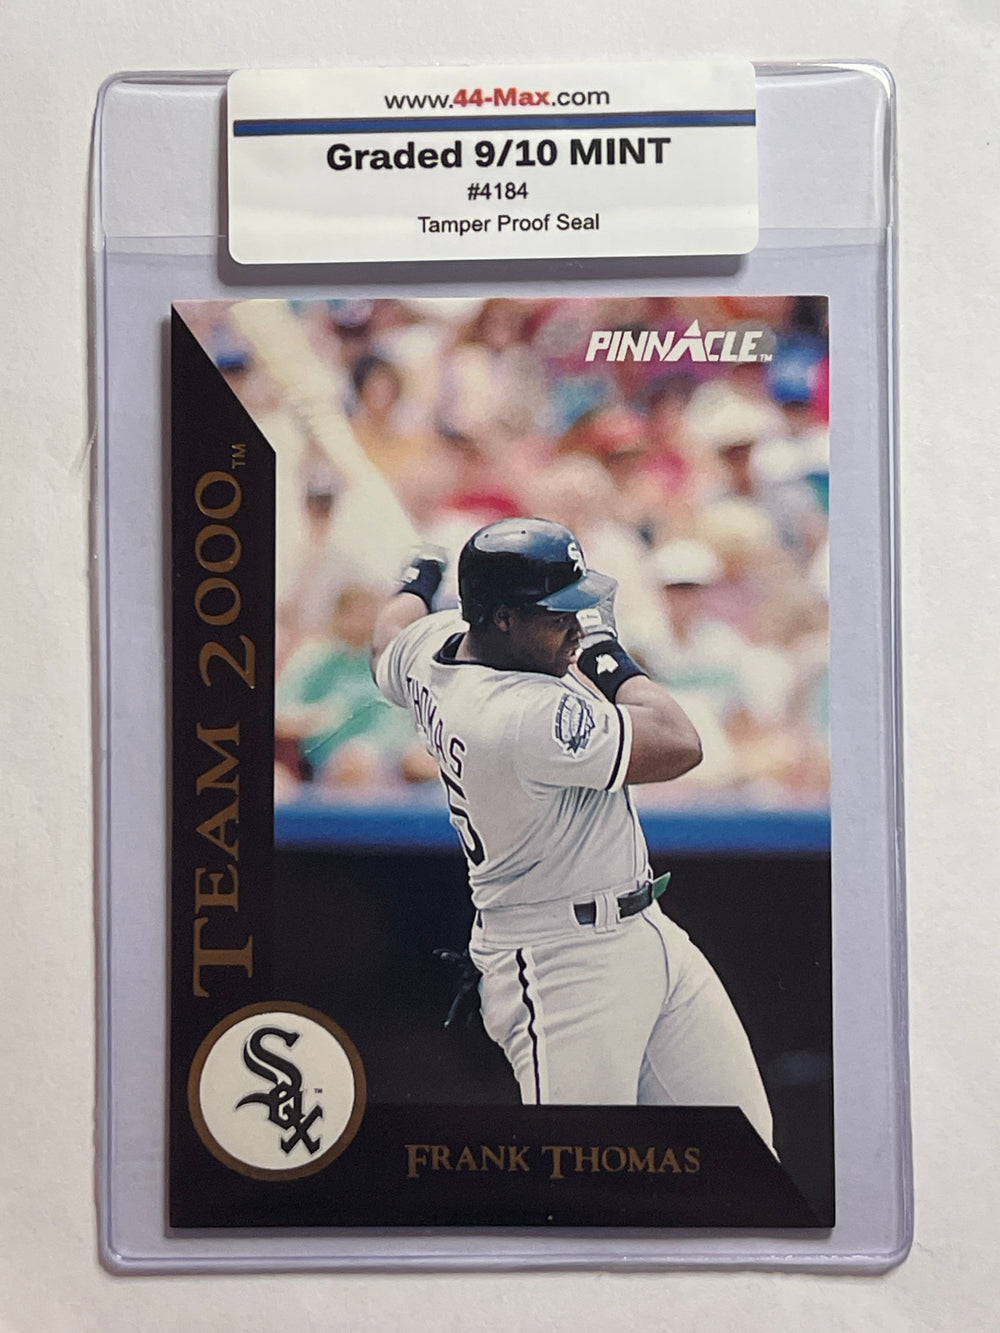 Frank Thomas Team 2000 1992 Pinnacle Baseball Card. 44-Max 9/10 Mint #4184